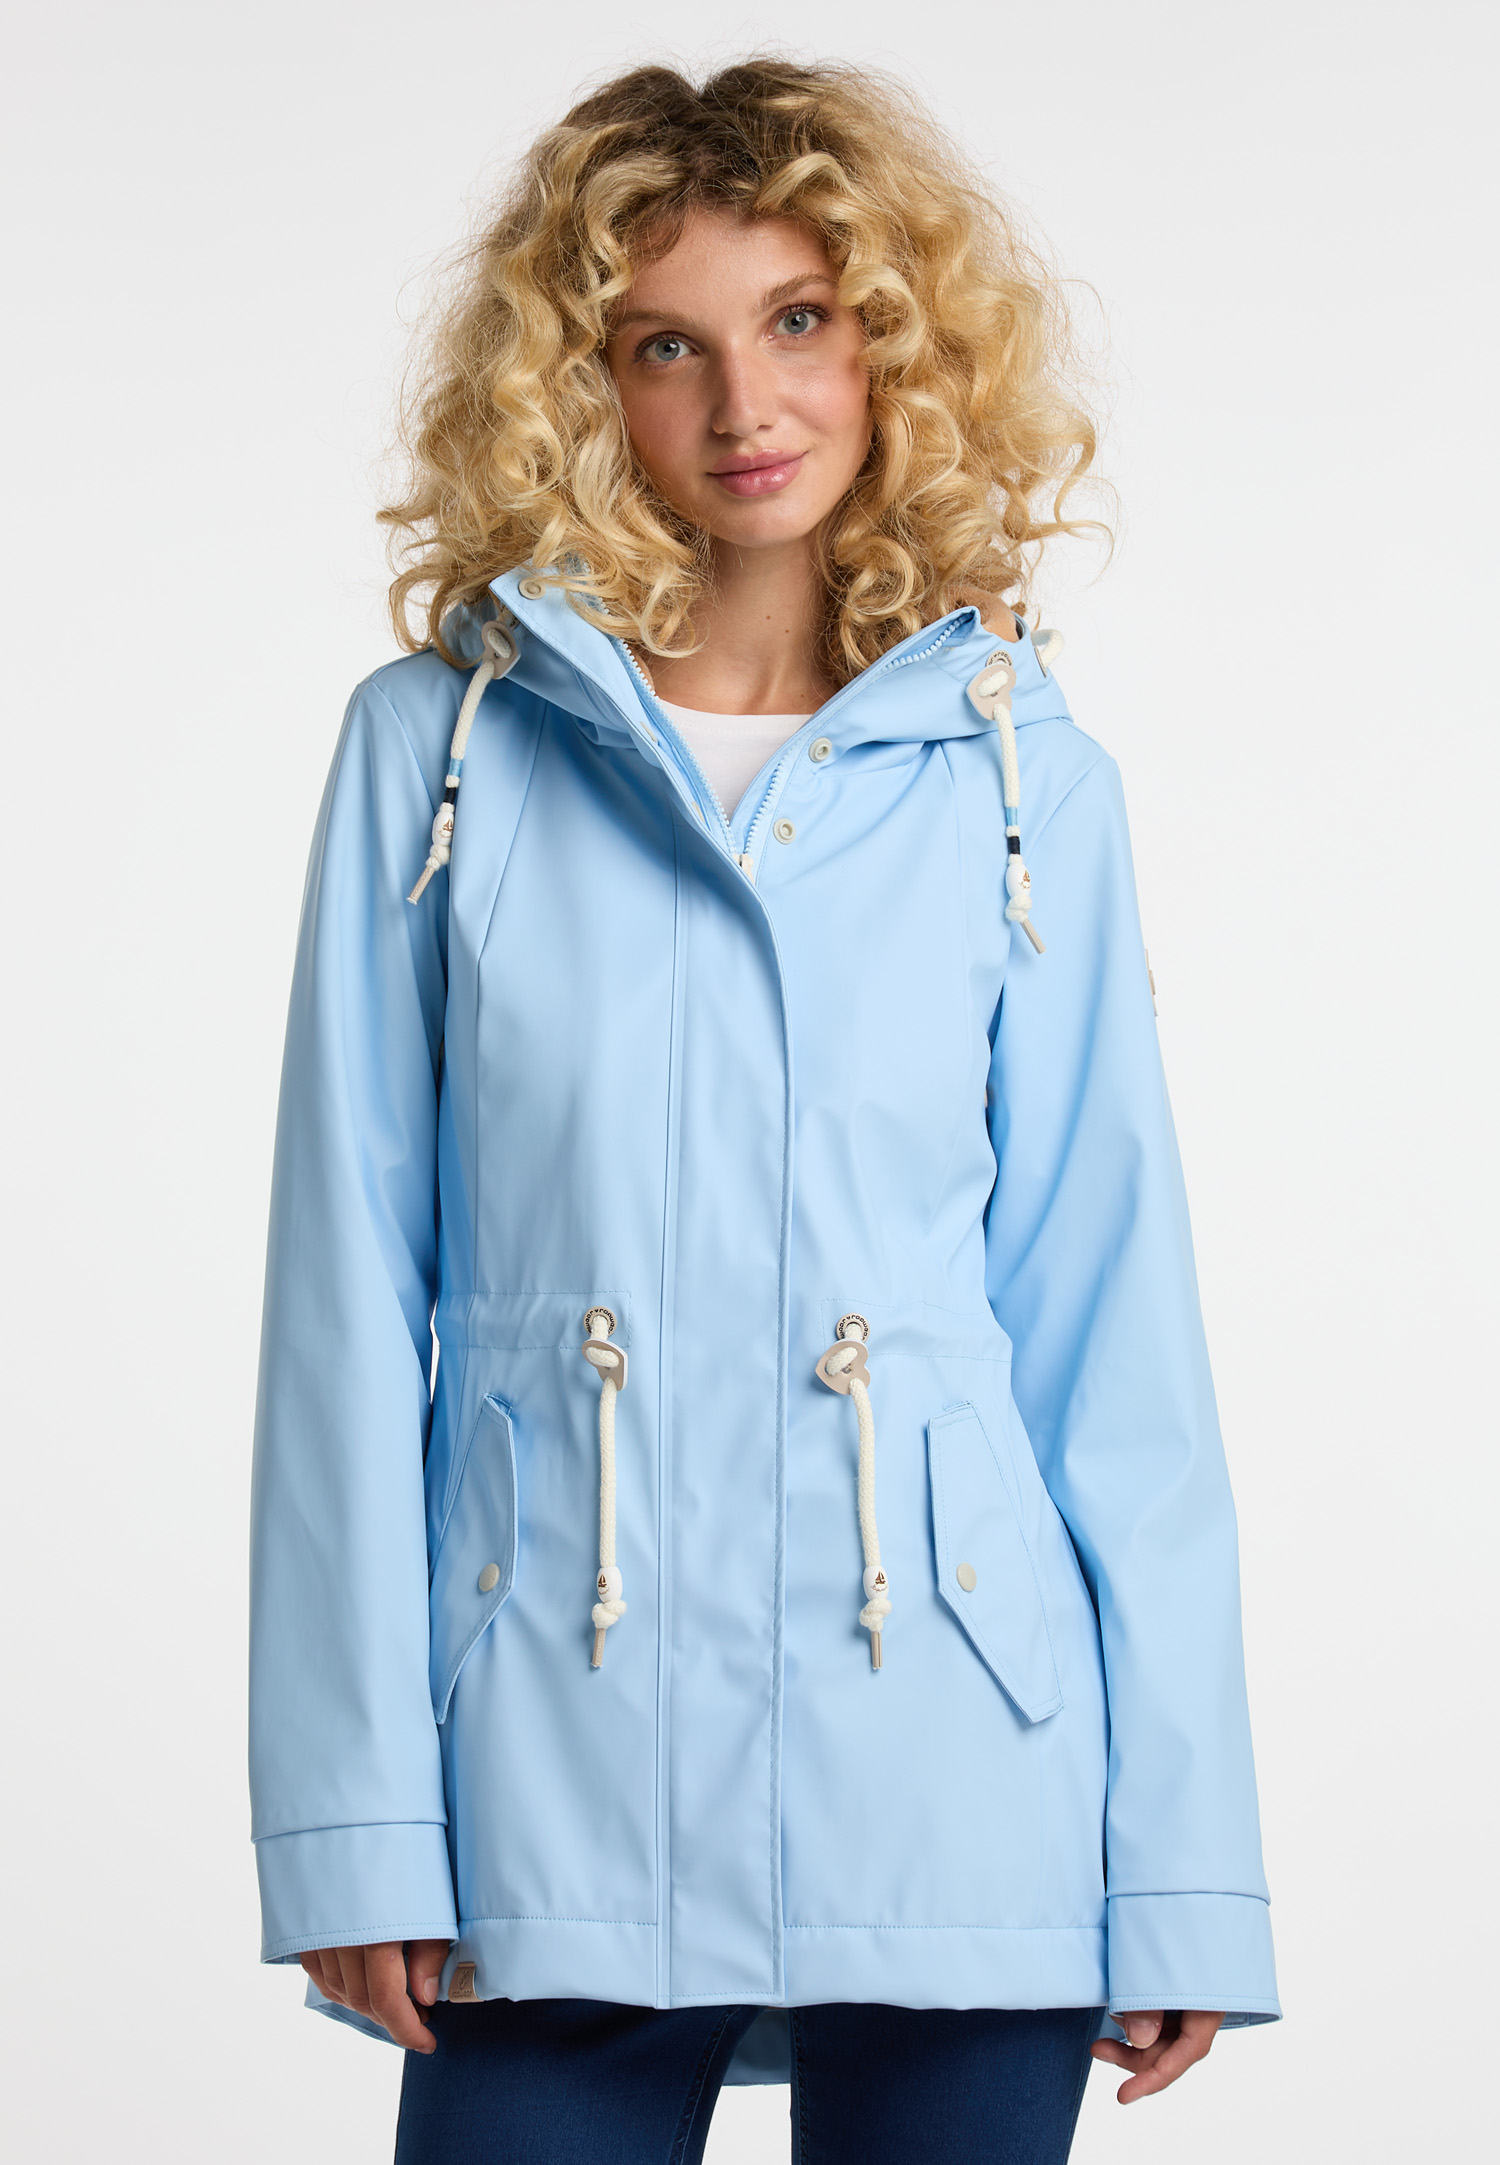 | wear Stylish Top ragwear Magazine jackets season! | this rain to